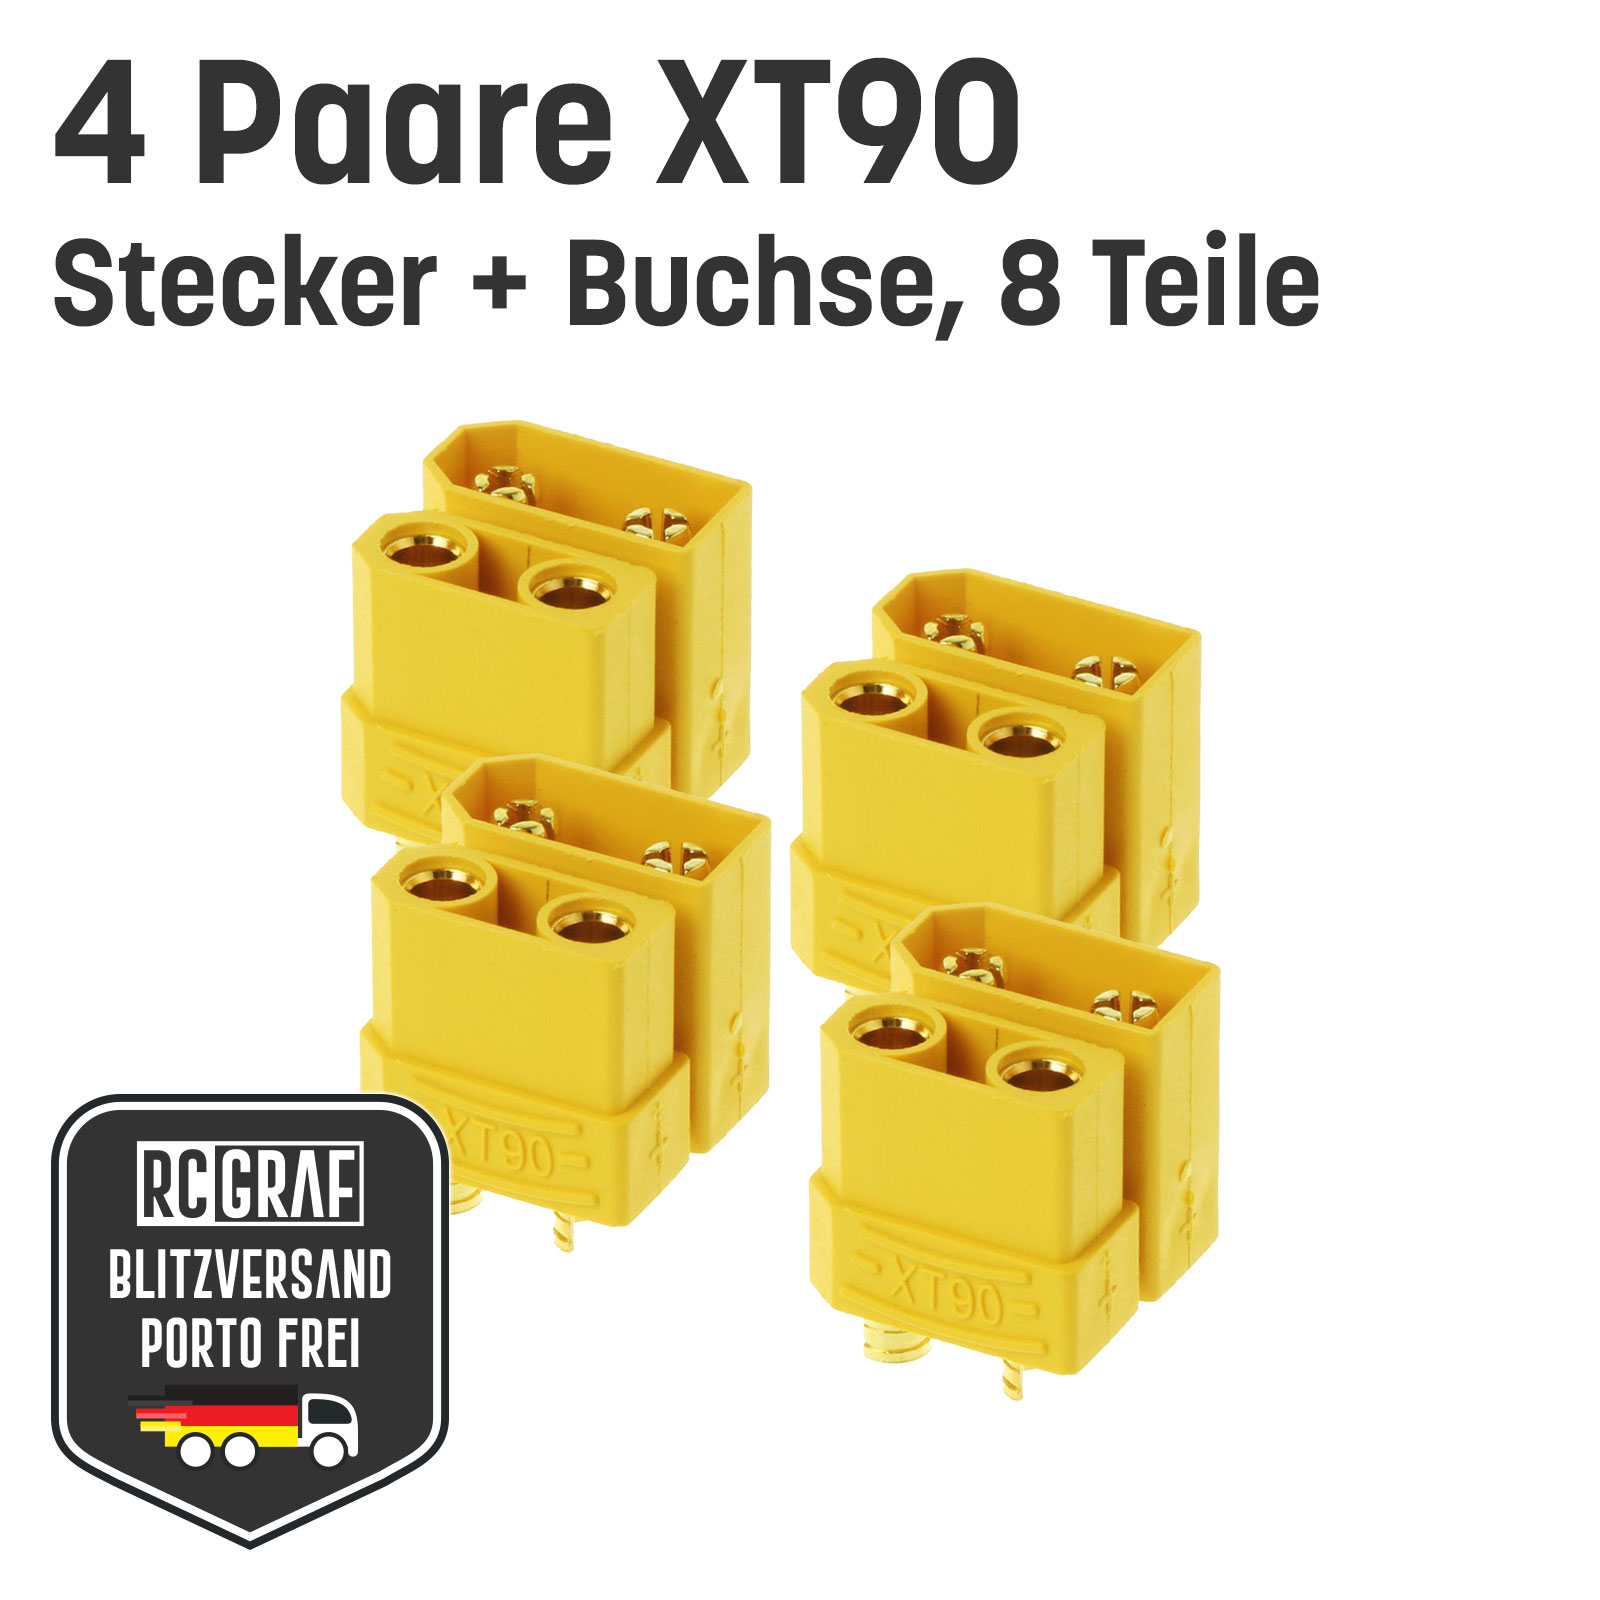 4 Paare XT90 Hochstrom Goldstecker Stecker Buchse Lipo Akku ESC 90A RC Modellbau